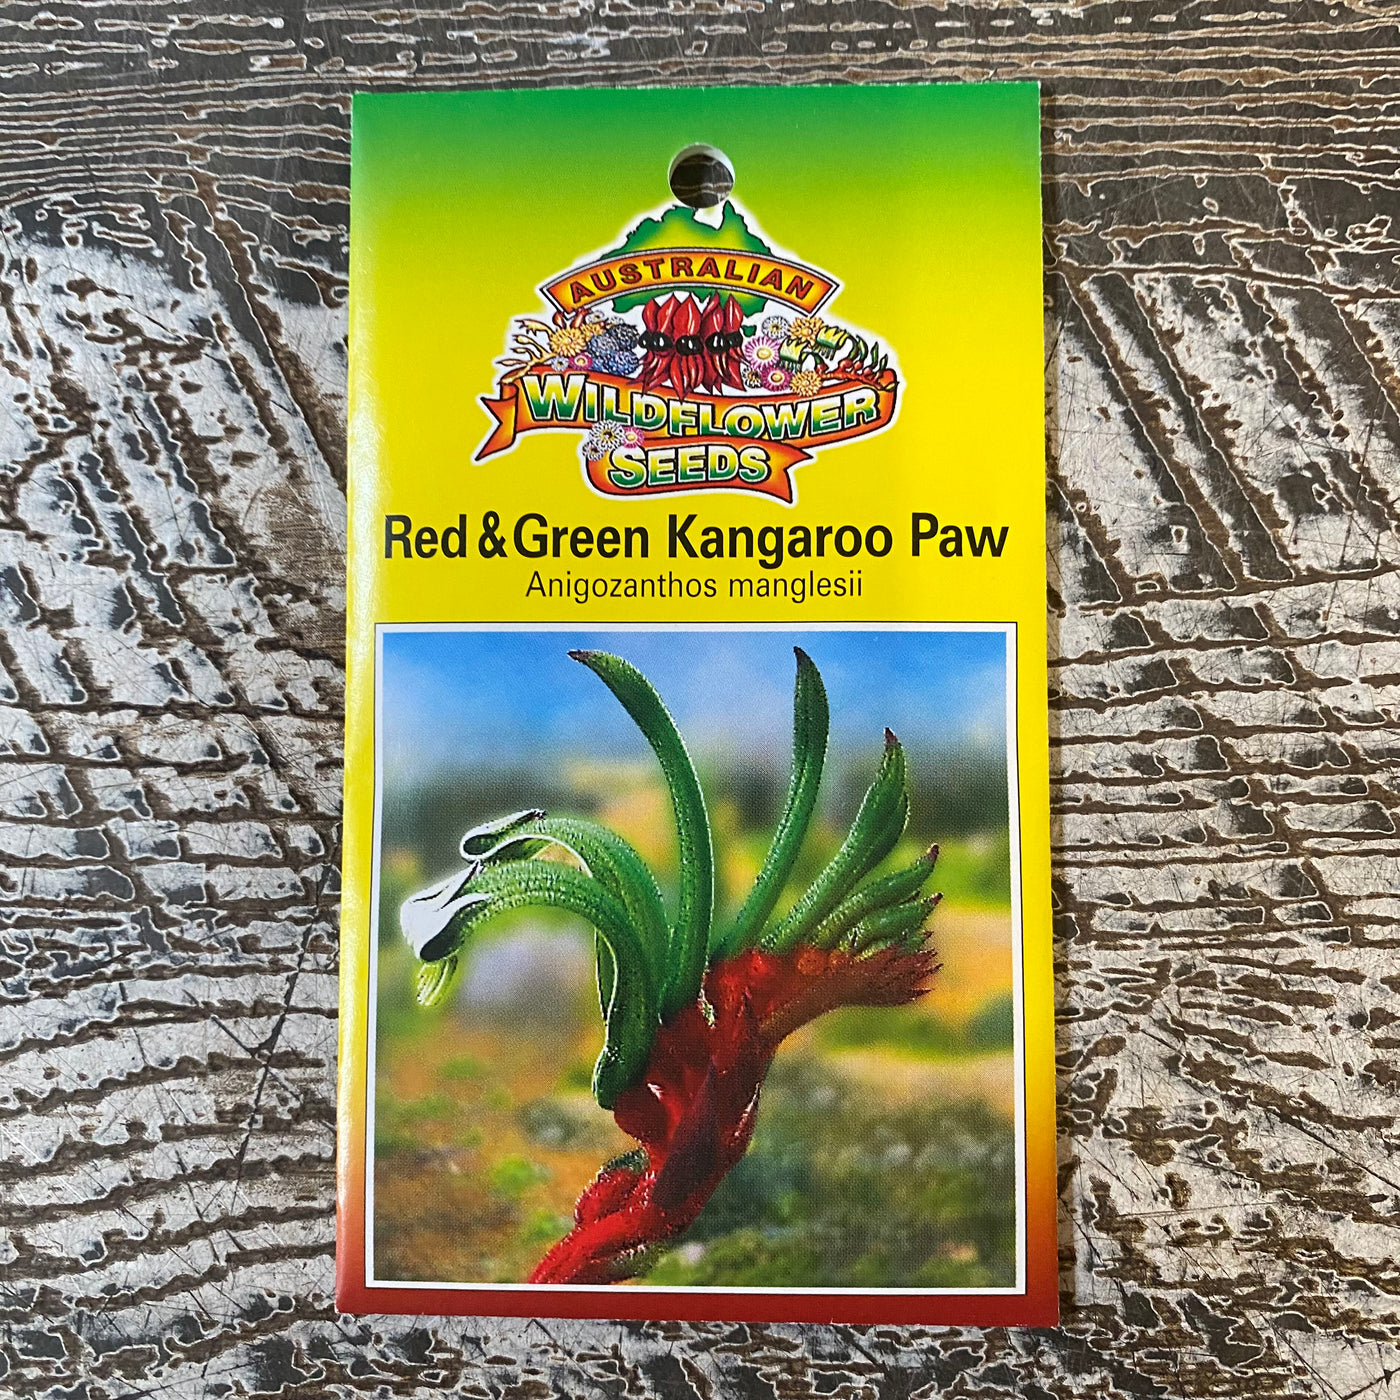 AUST WILDFLOWER SEED red & green kangaroo paw